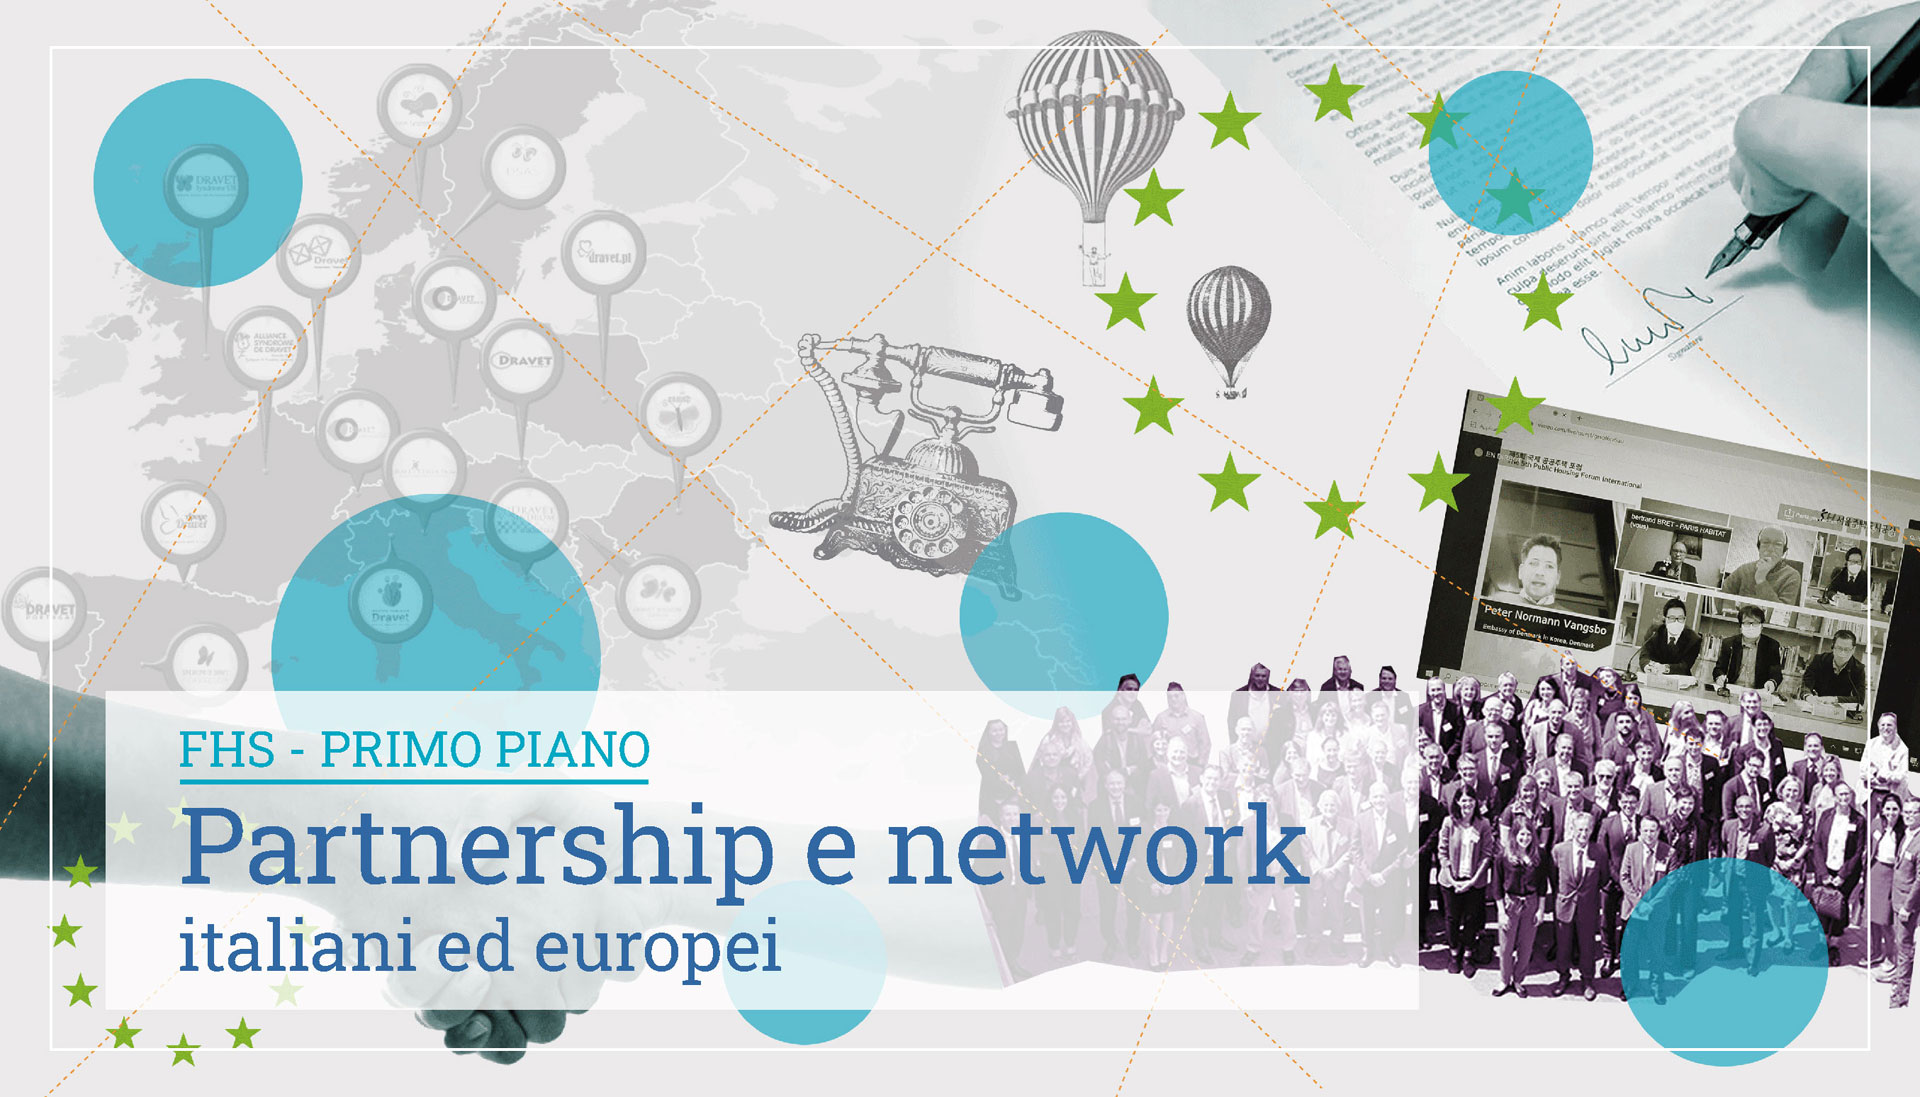 PARTNERSHIP E NETWORK ITALIANI ED EUROPEI